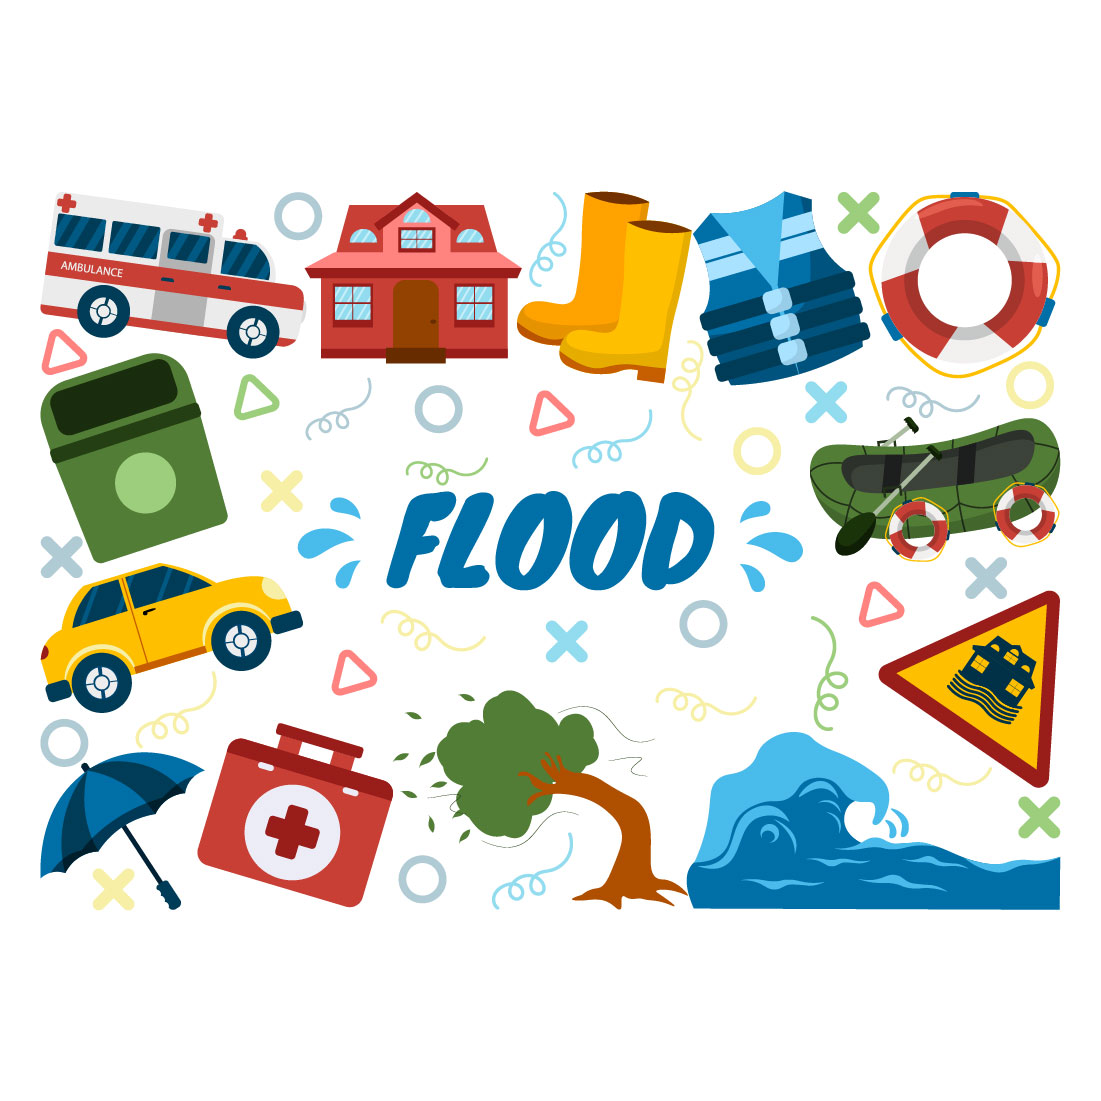 6 Floods Vector Illustration preview image.